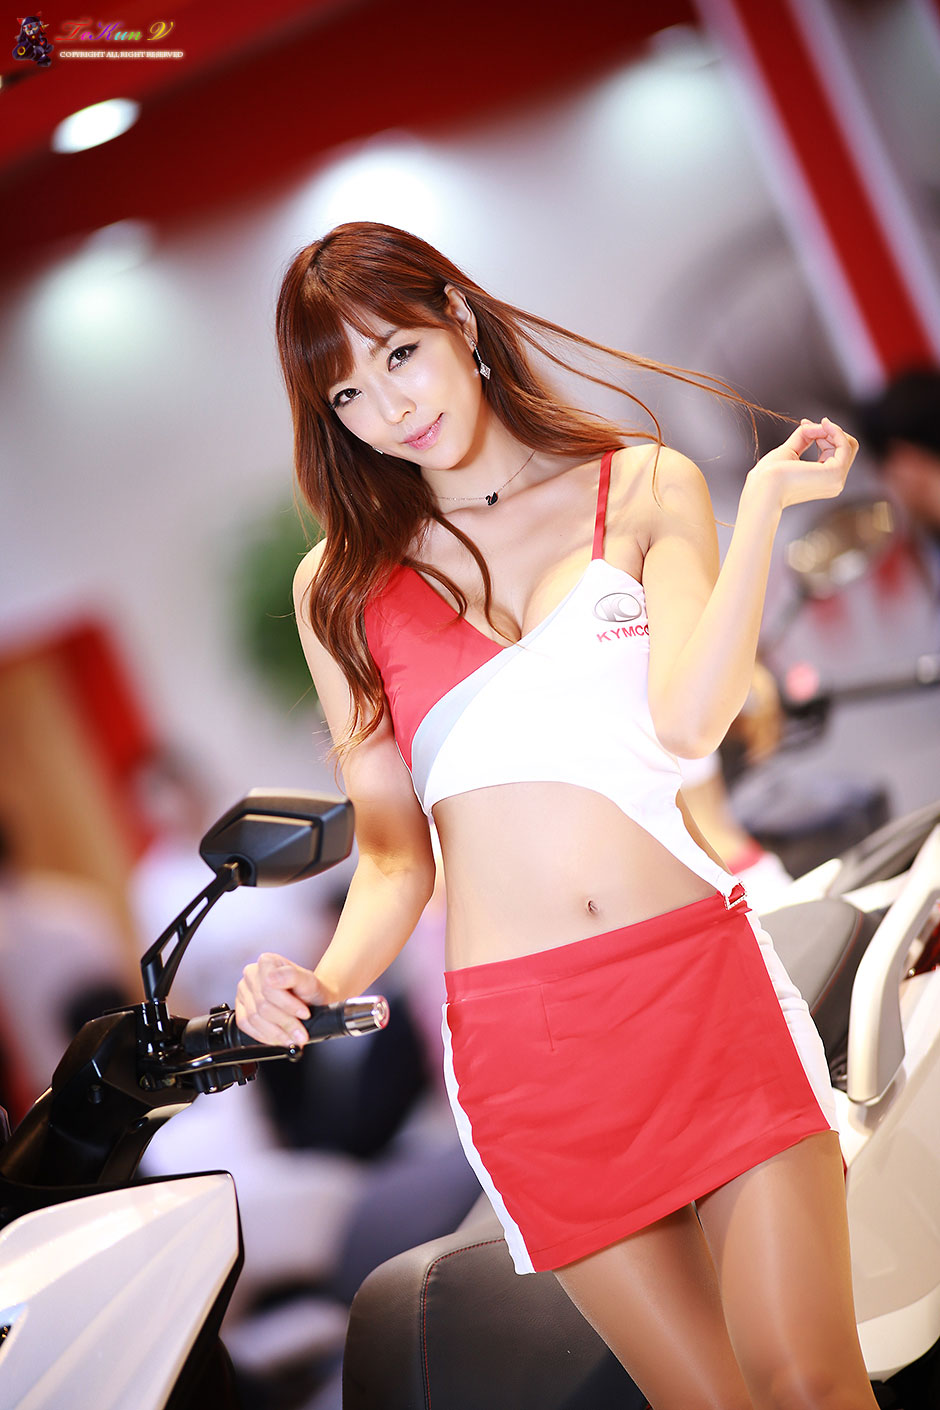 Kang I Na Seoul Motorcycle Show 2015 KYMCO